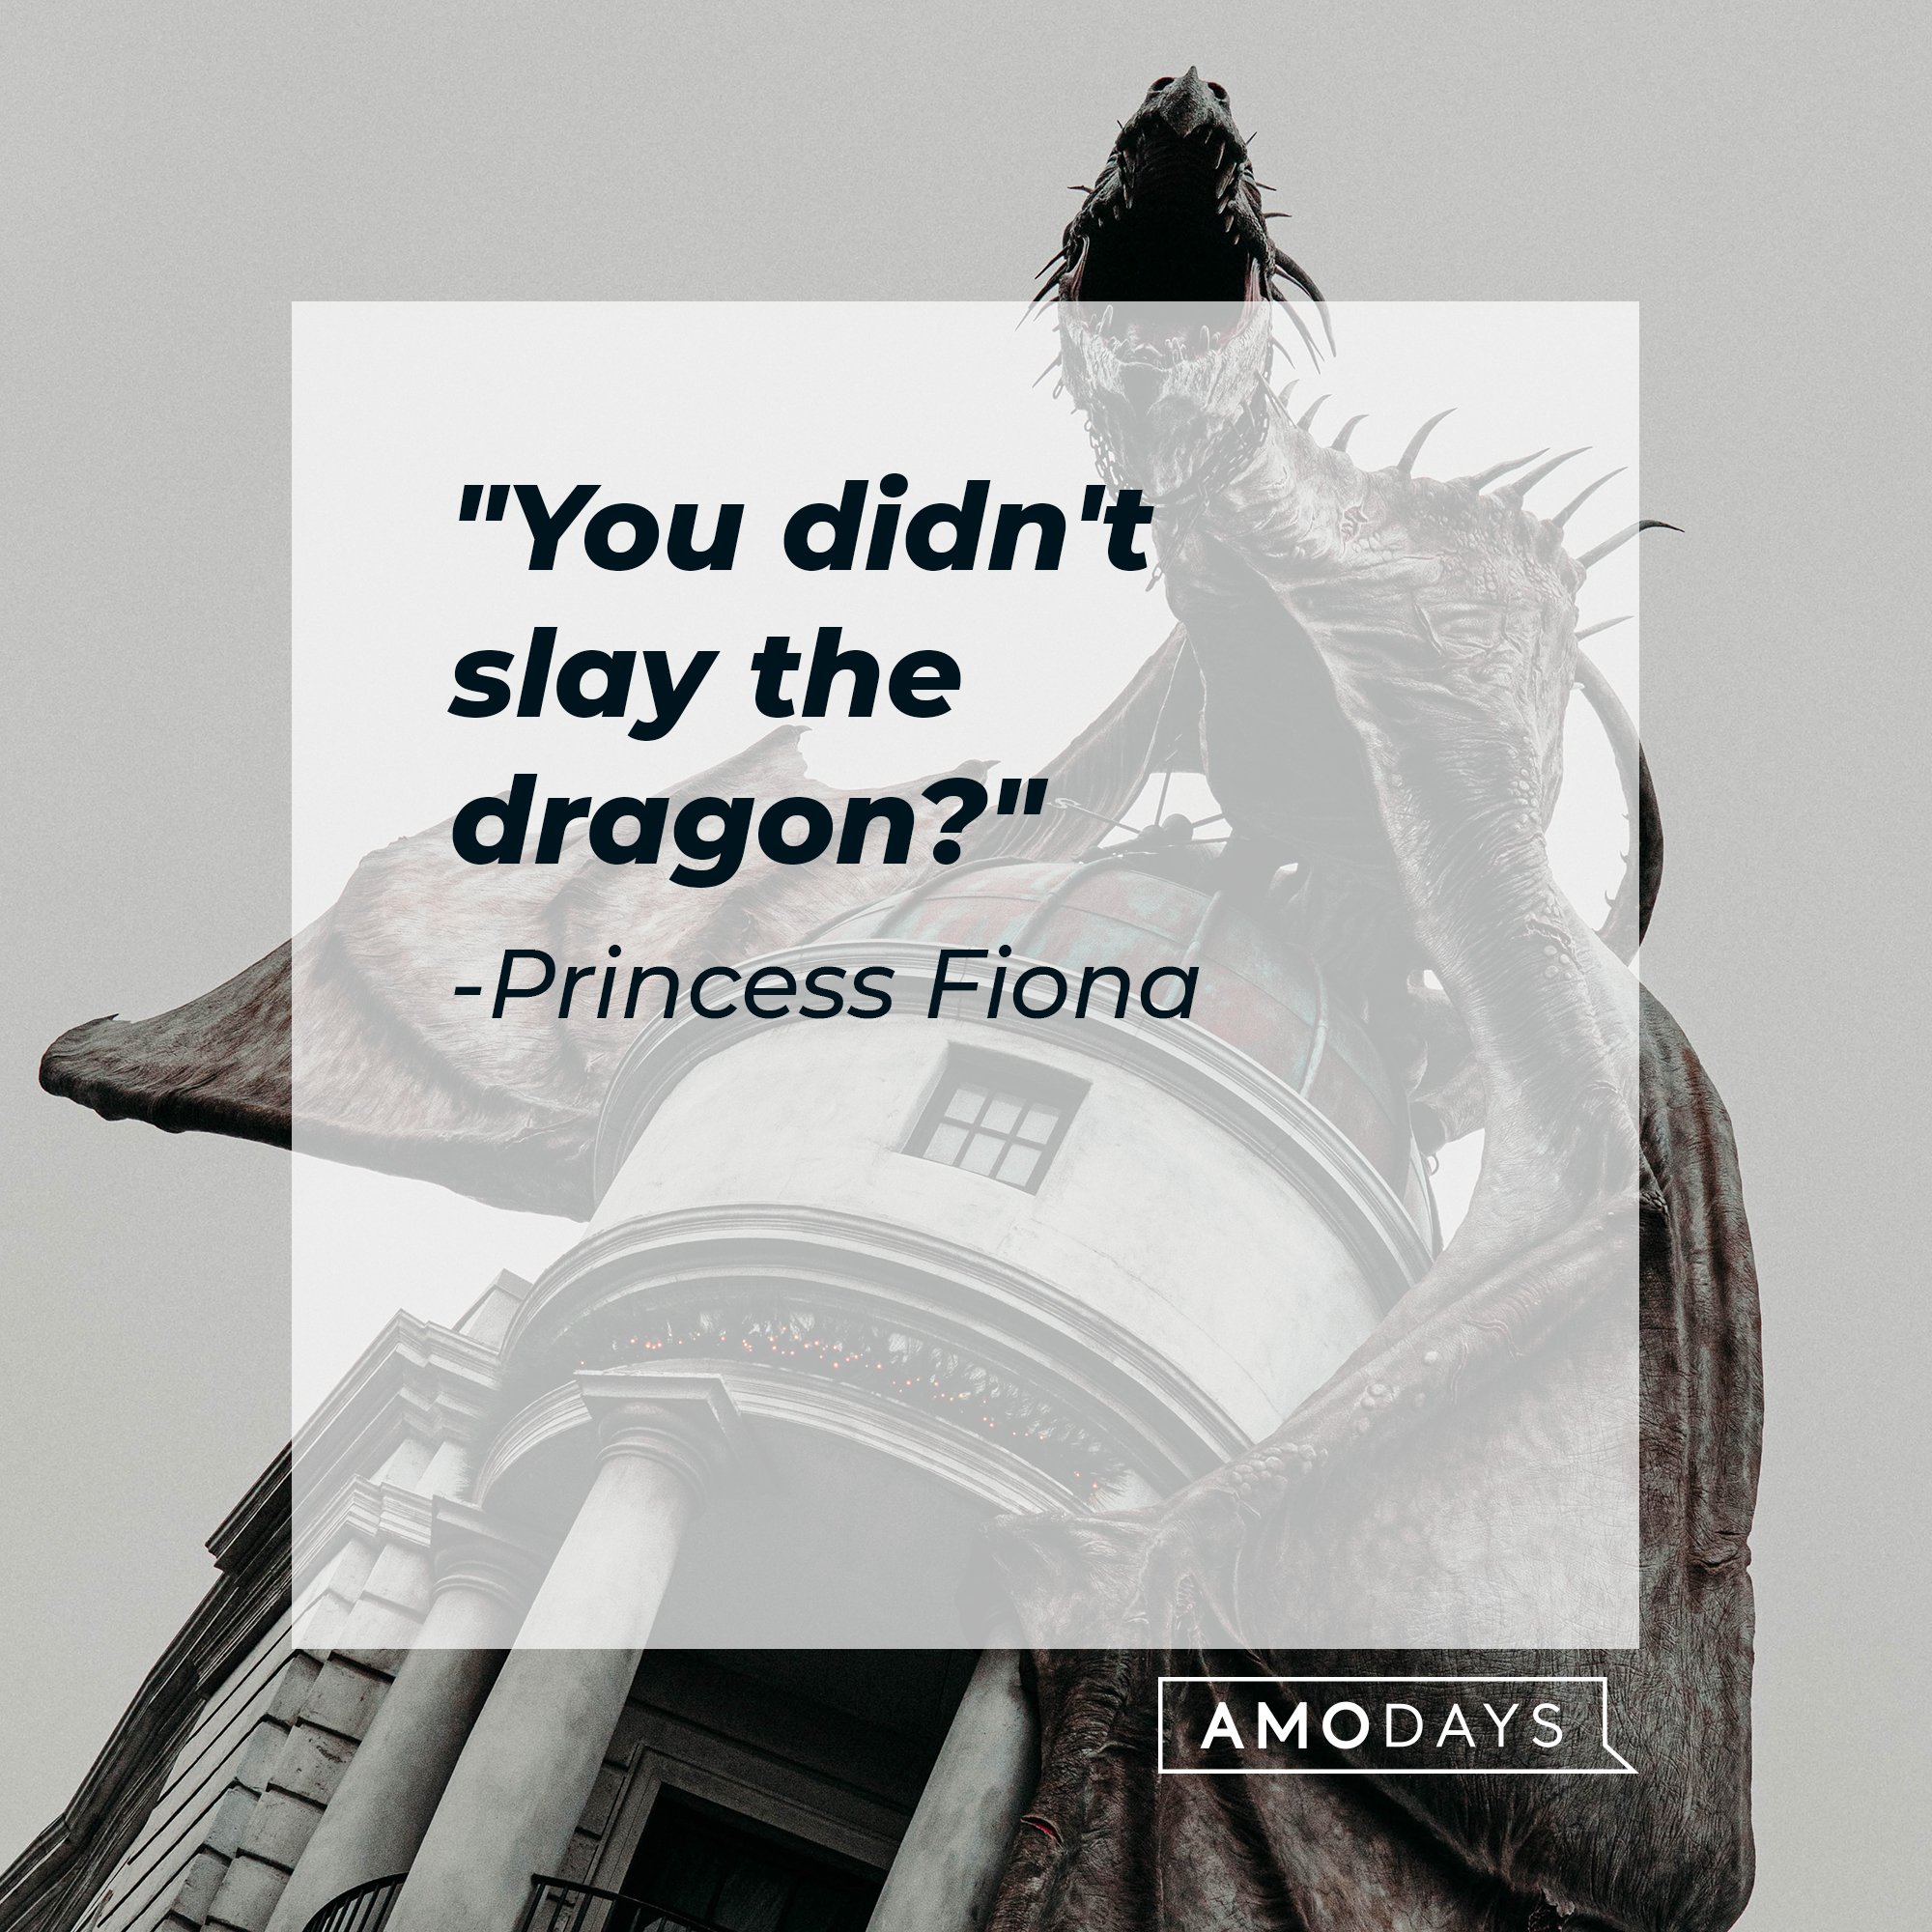 Princess Fiona's quote: "You didn't slay the dragon?" | Image: AmoDays